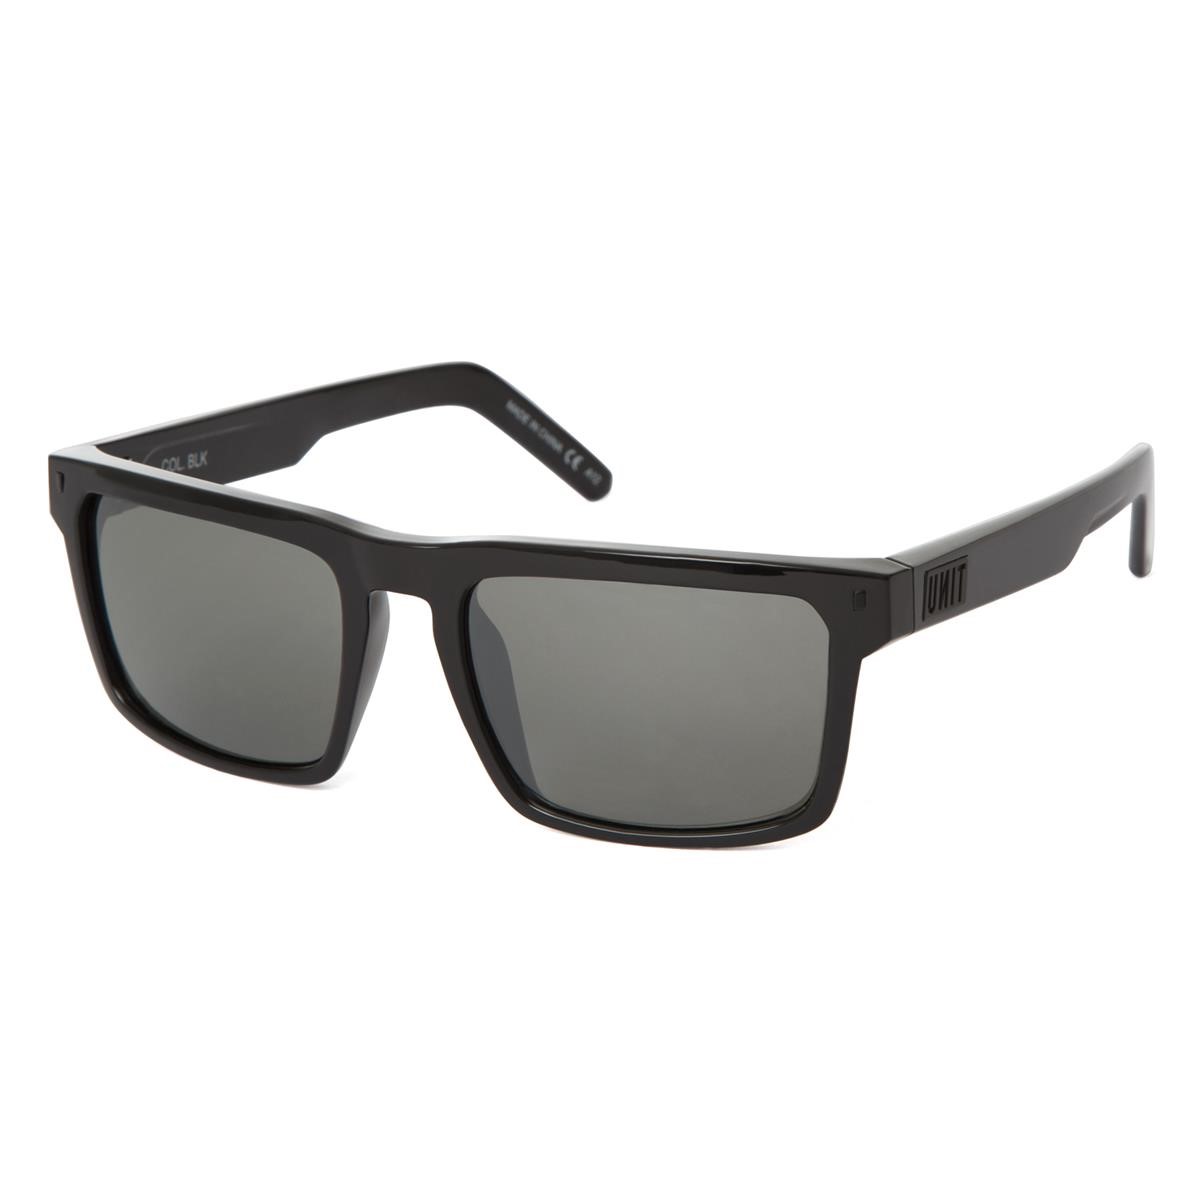 Unit Sonnenbrille Primer Schwarz/Grau